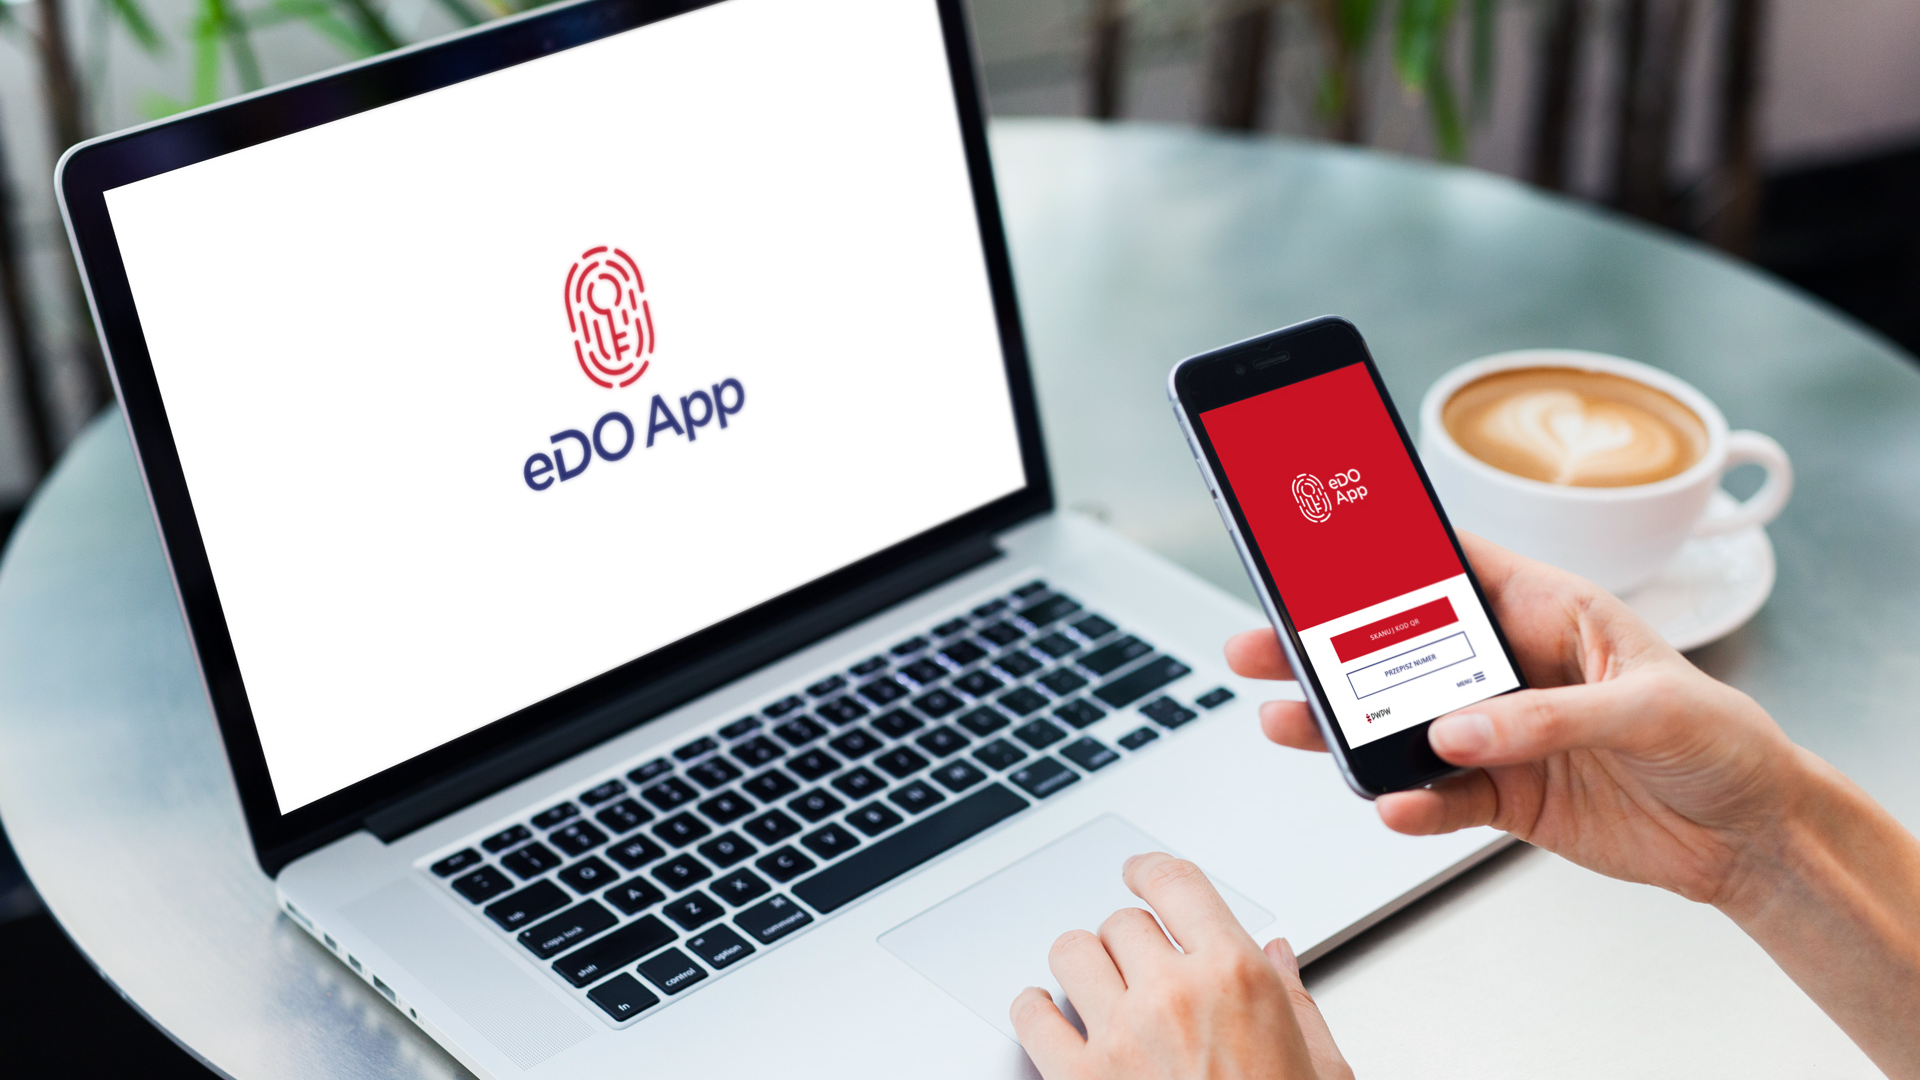 eDO mobile and desktop app